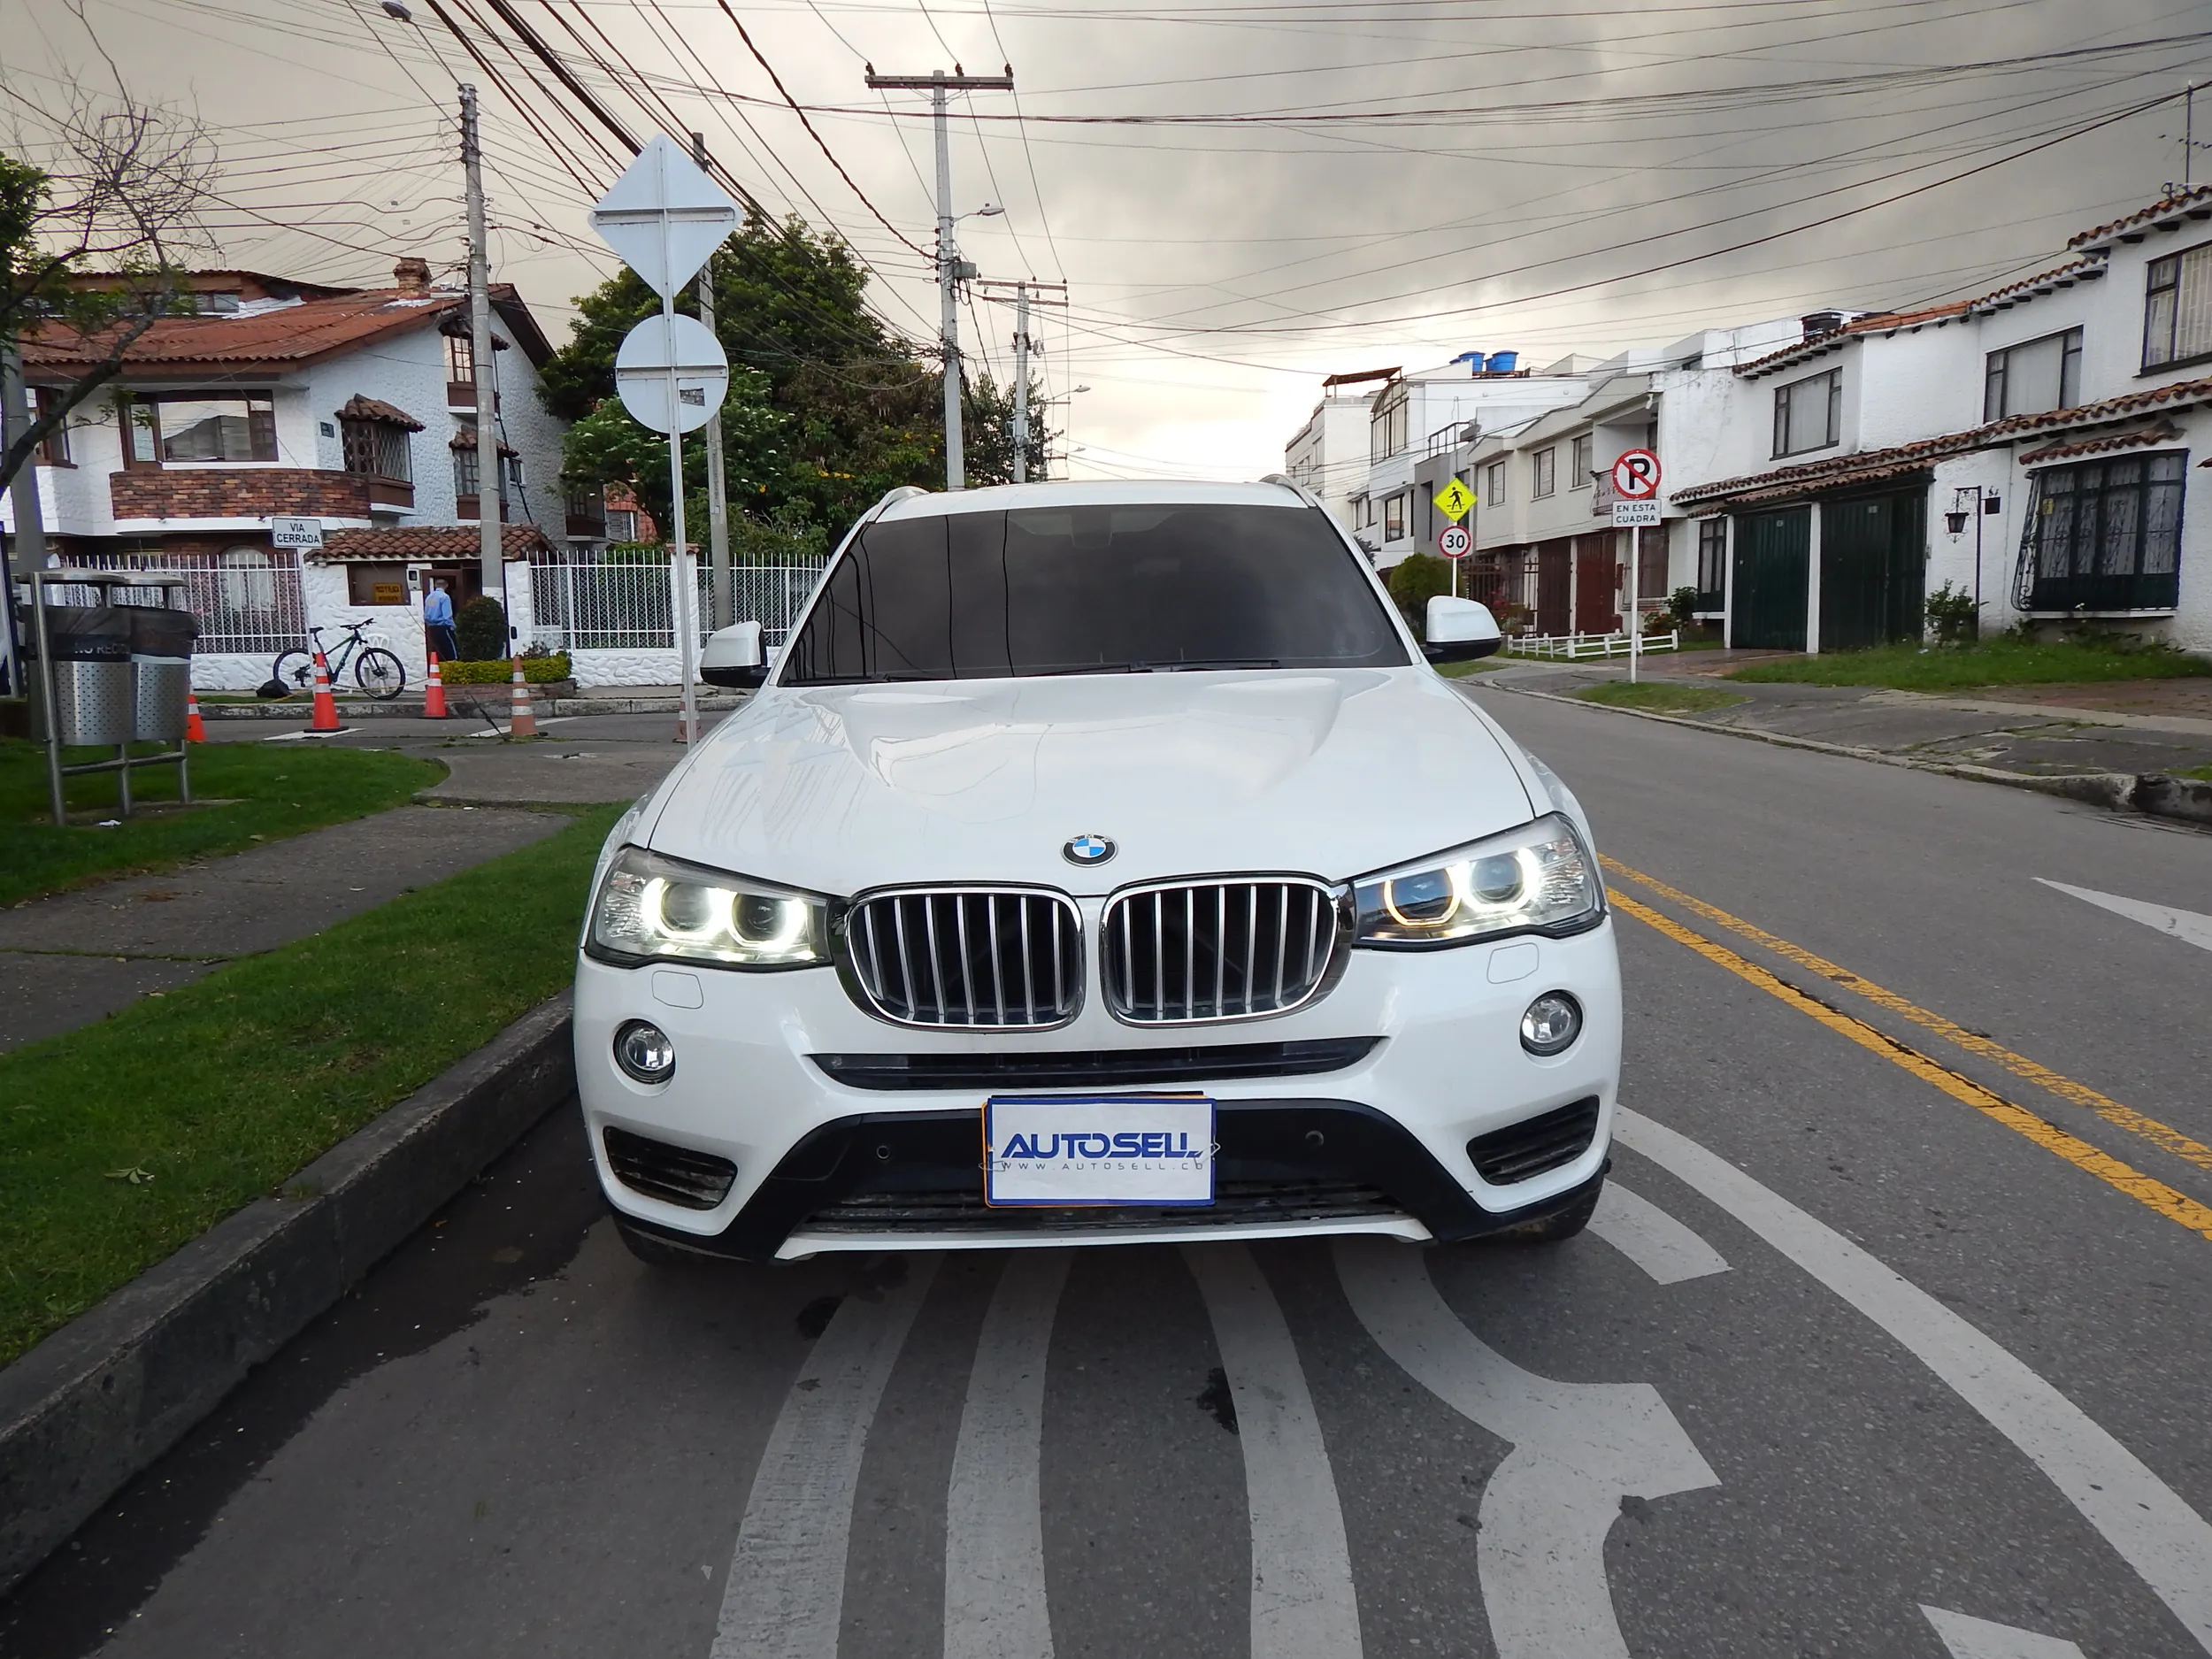 BMW CARROS X3 [F25] xDrive28i 2016